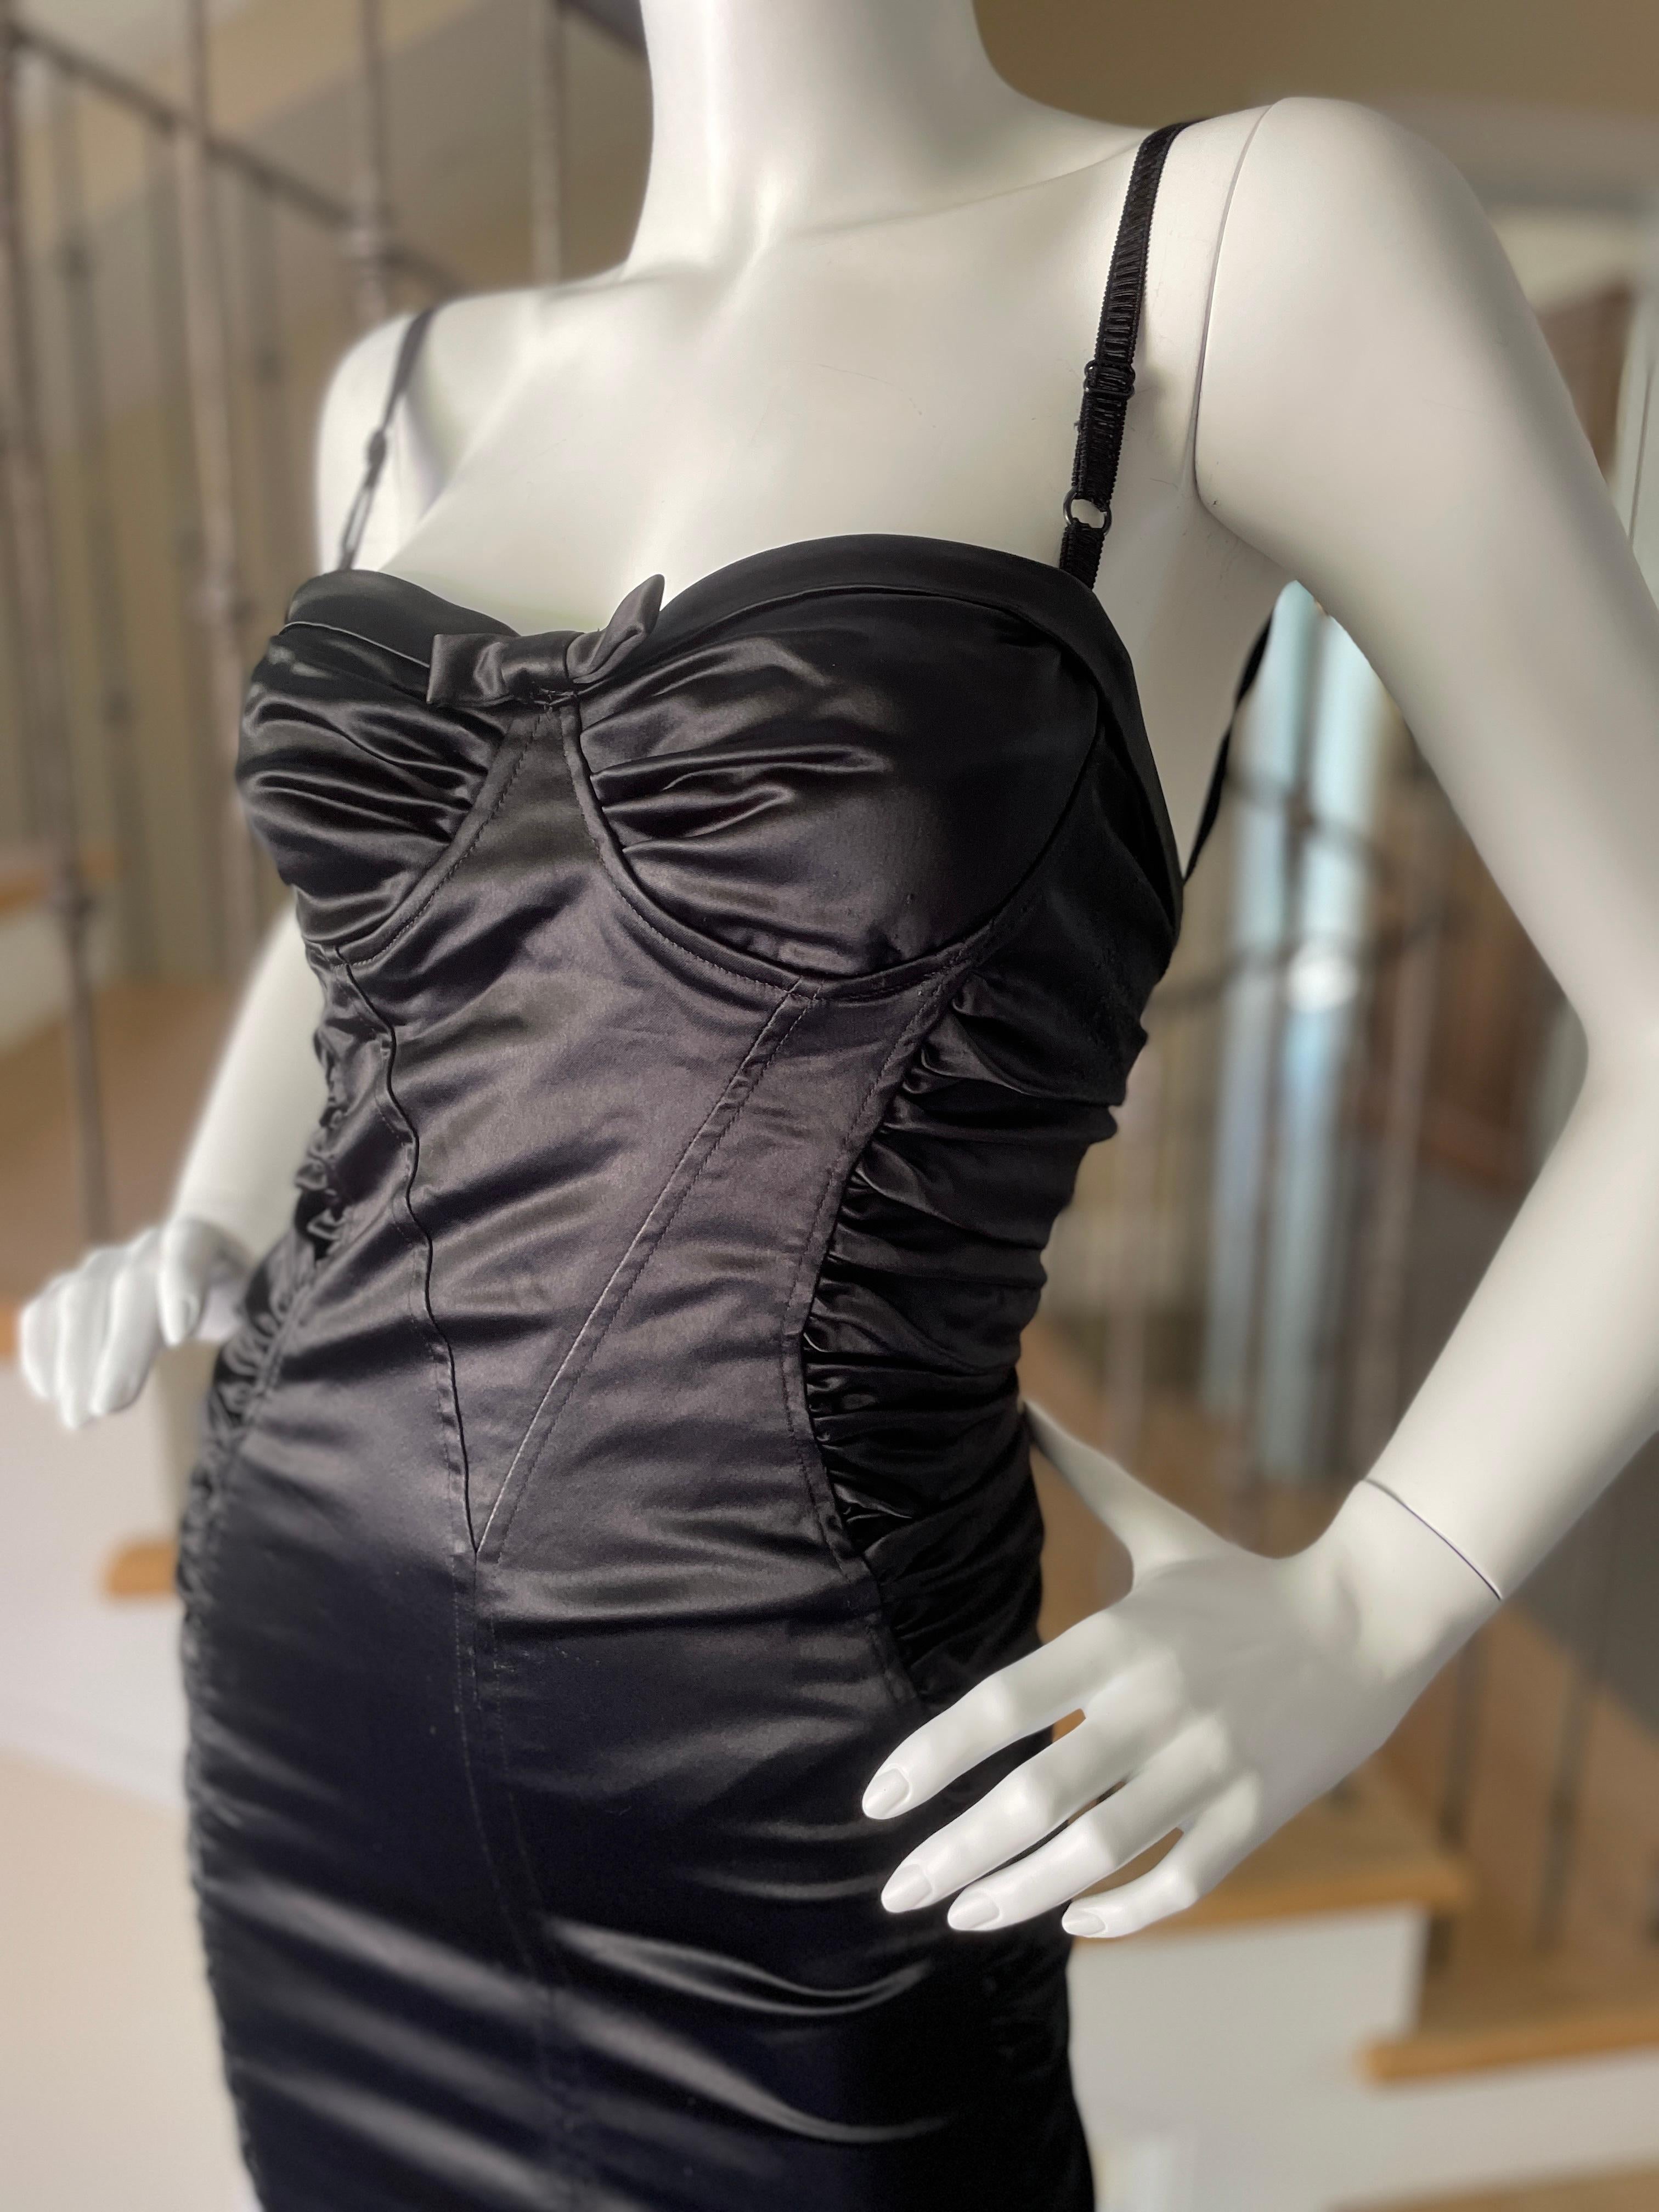 D&G Vintage Ruched Black Cocktail Dress w Underwire Bra by Dolce & Gabbana For Sale 2